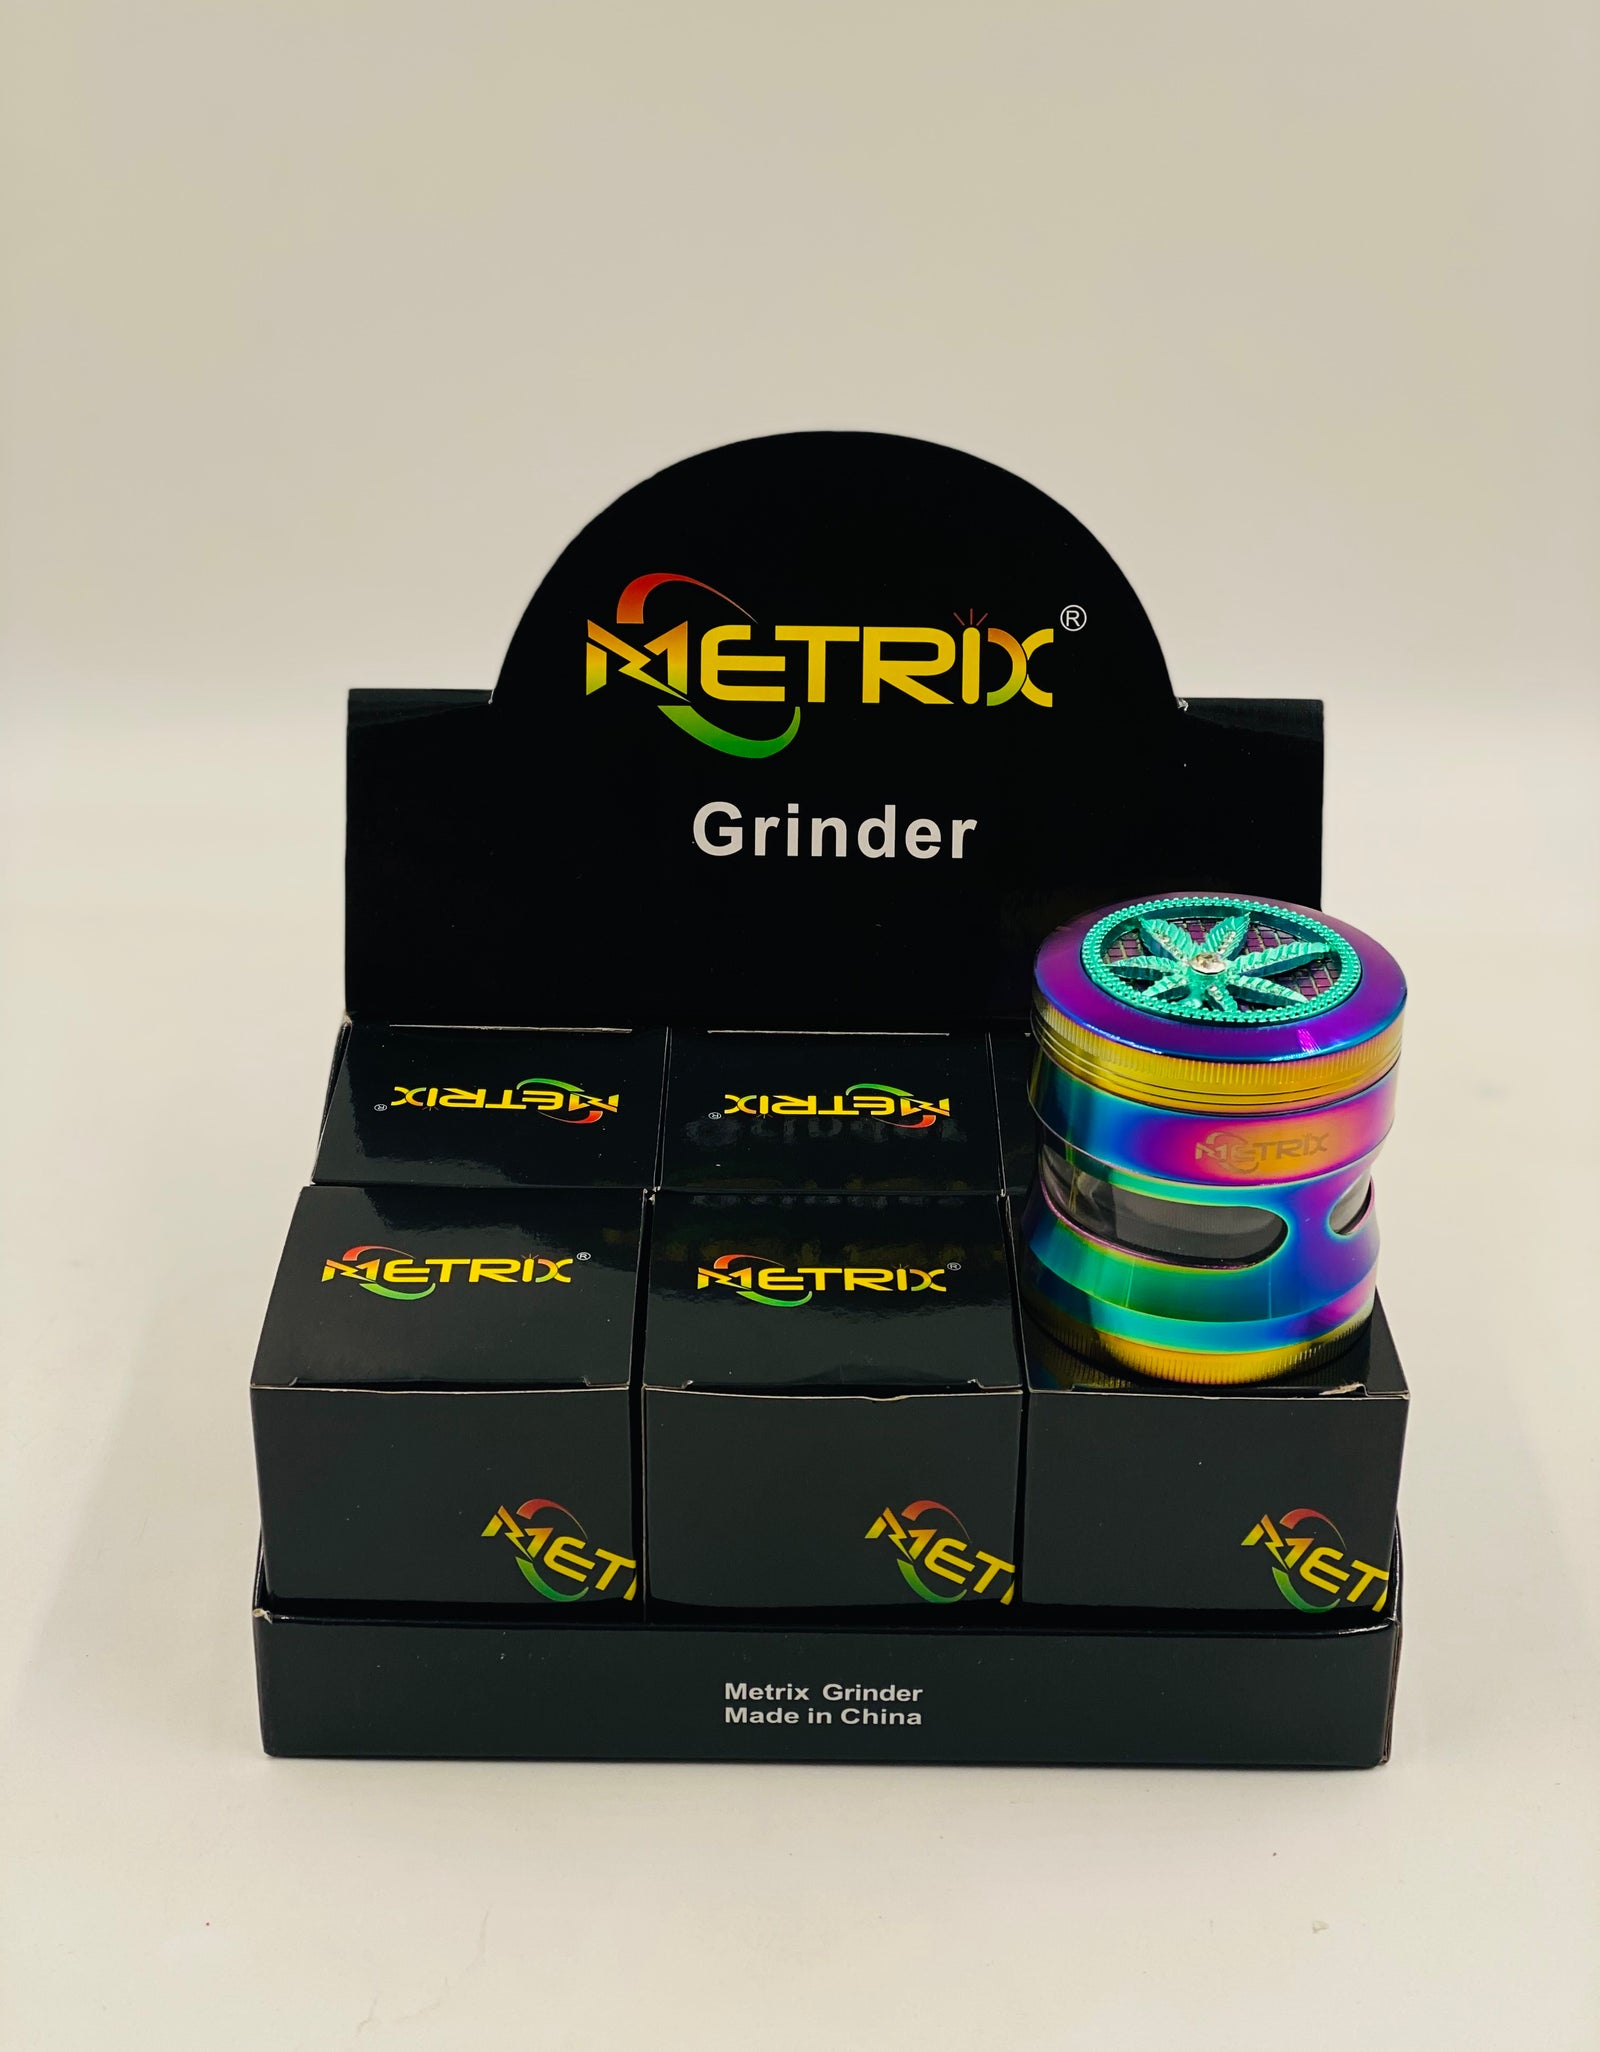 METRIX G-30 63 MM 4 LAYERS RAINDOW COLORED GRINDER WITH METRIX BOX